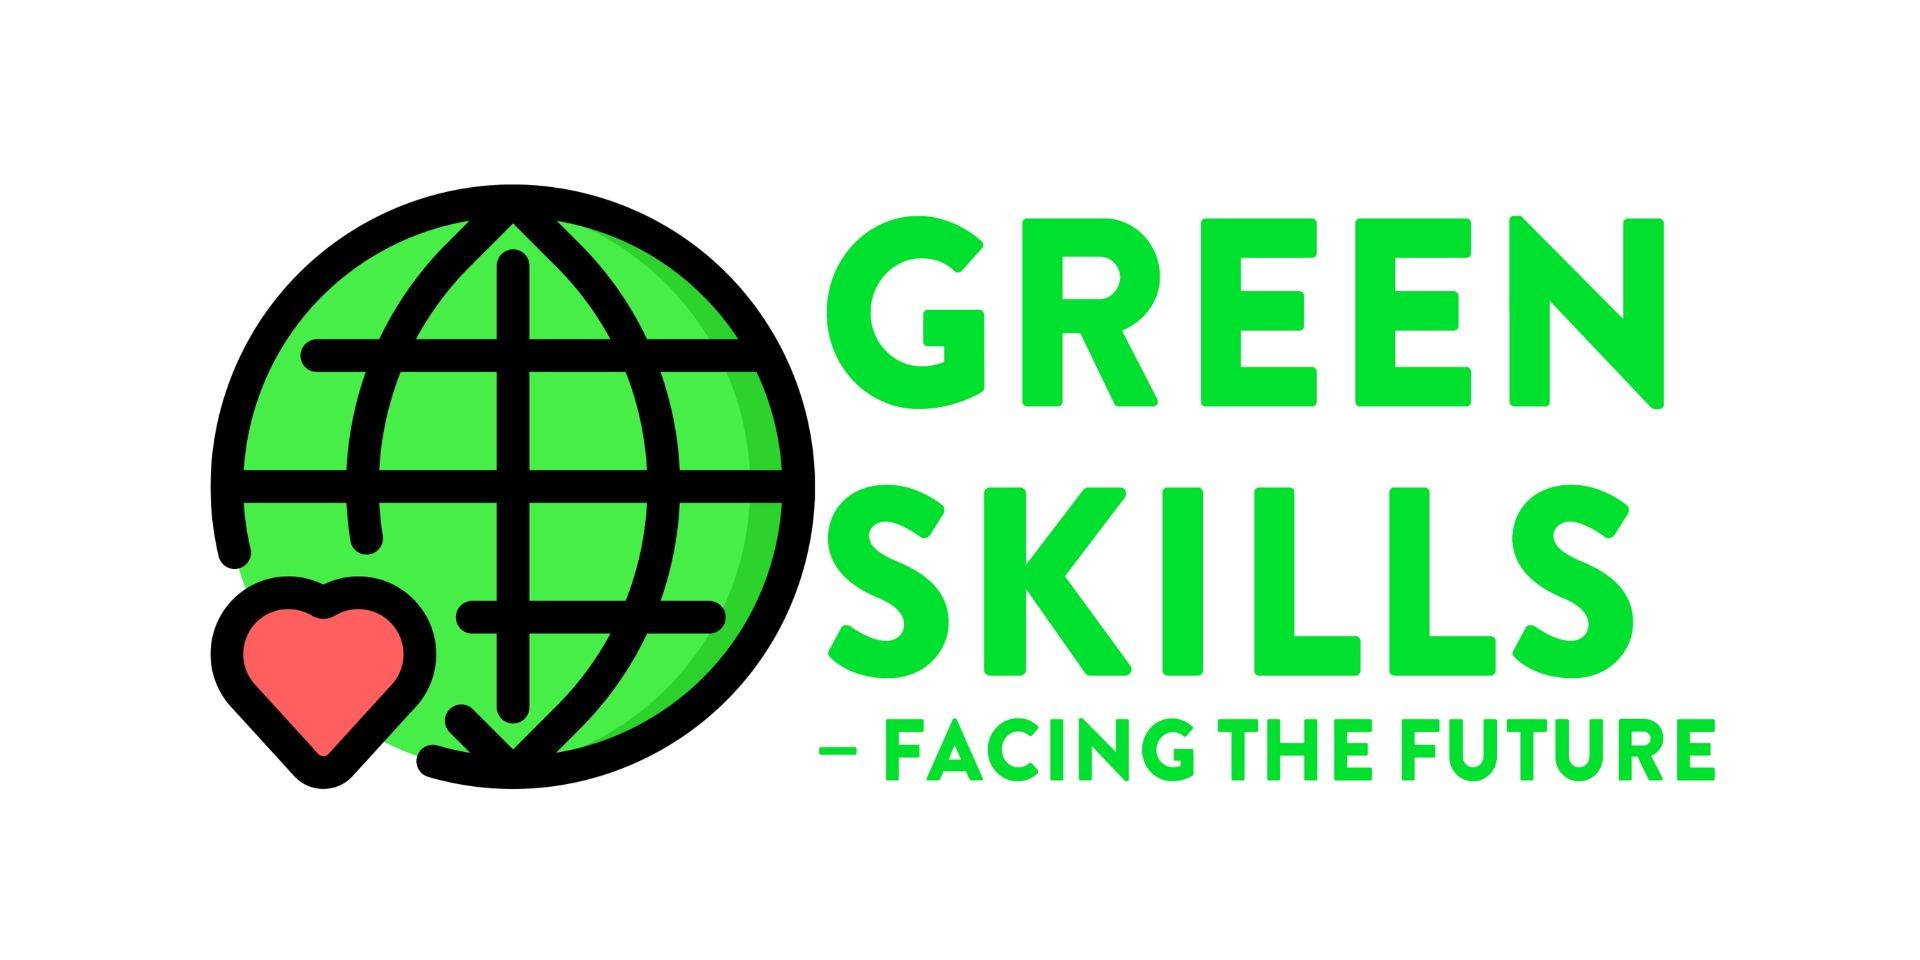 Green Skills - Facing The Future